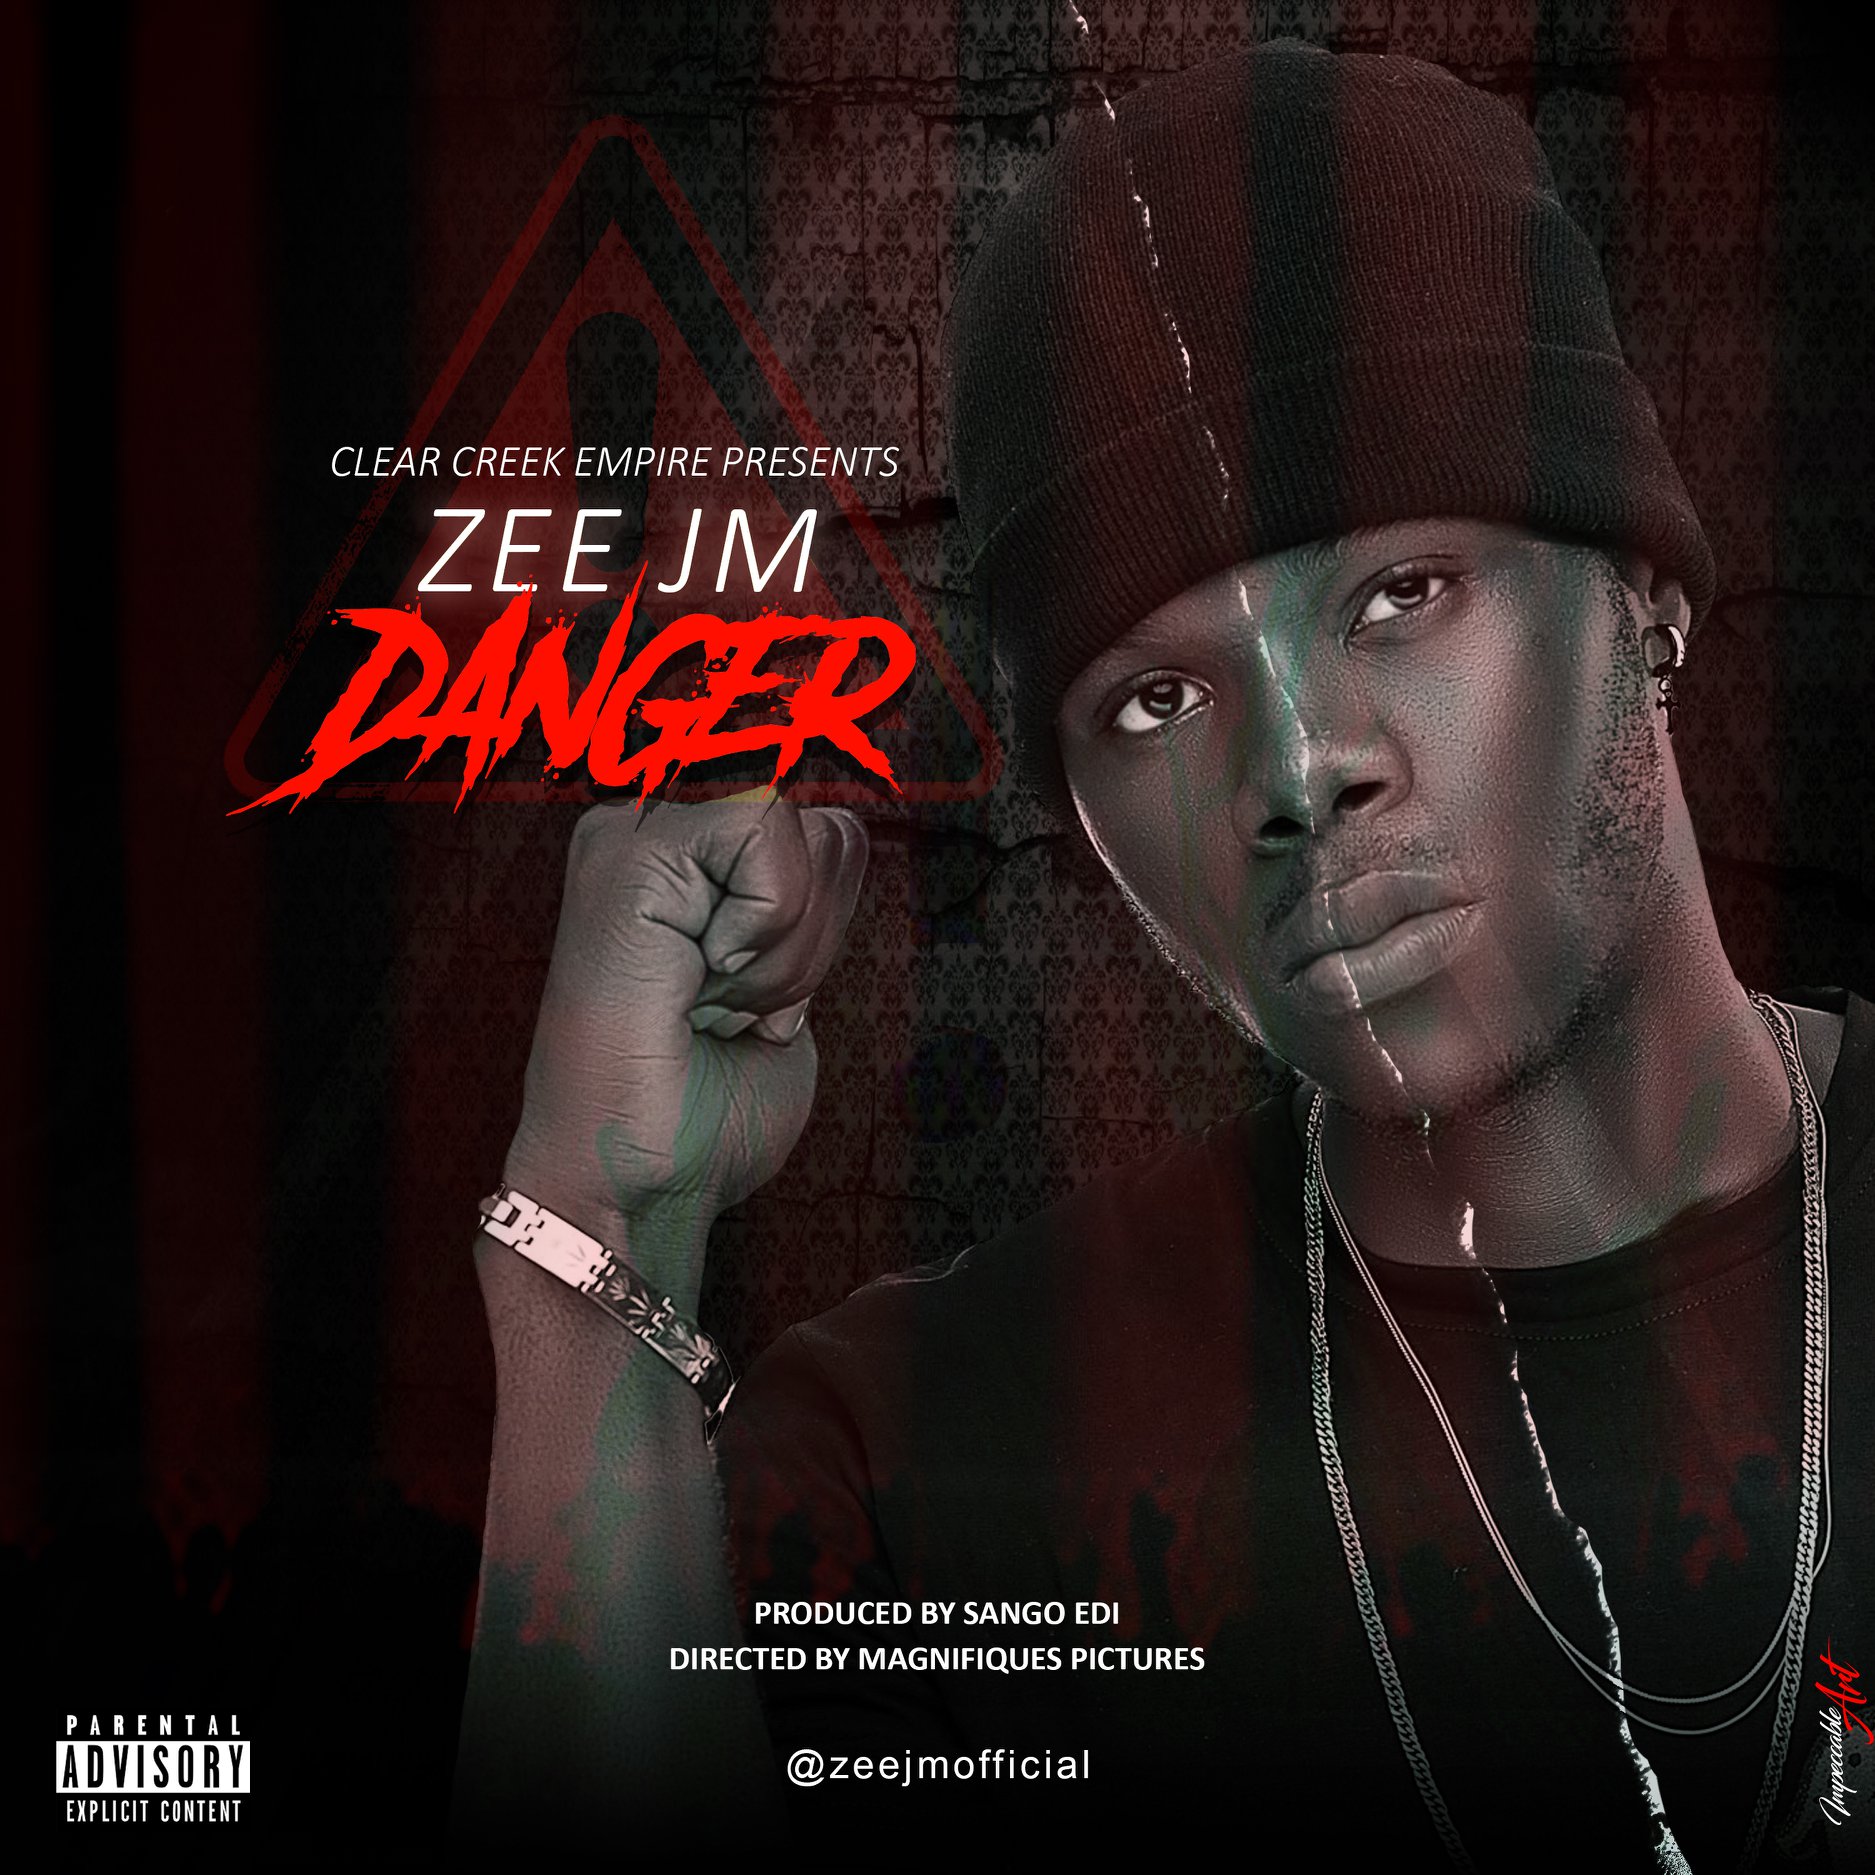 Zee JM - "Danger"